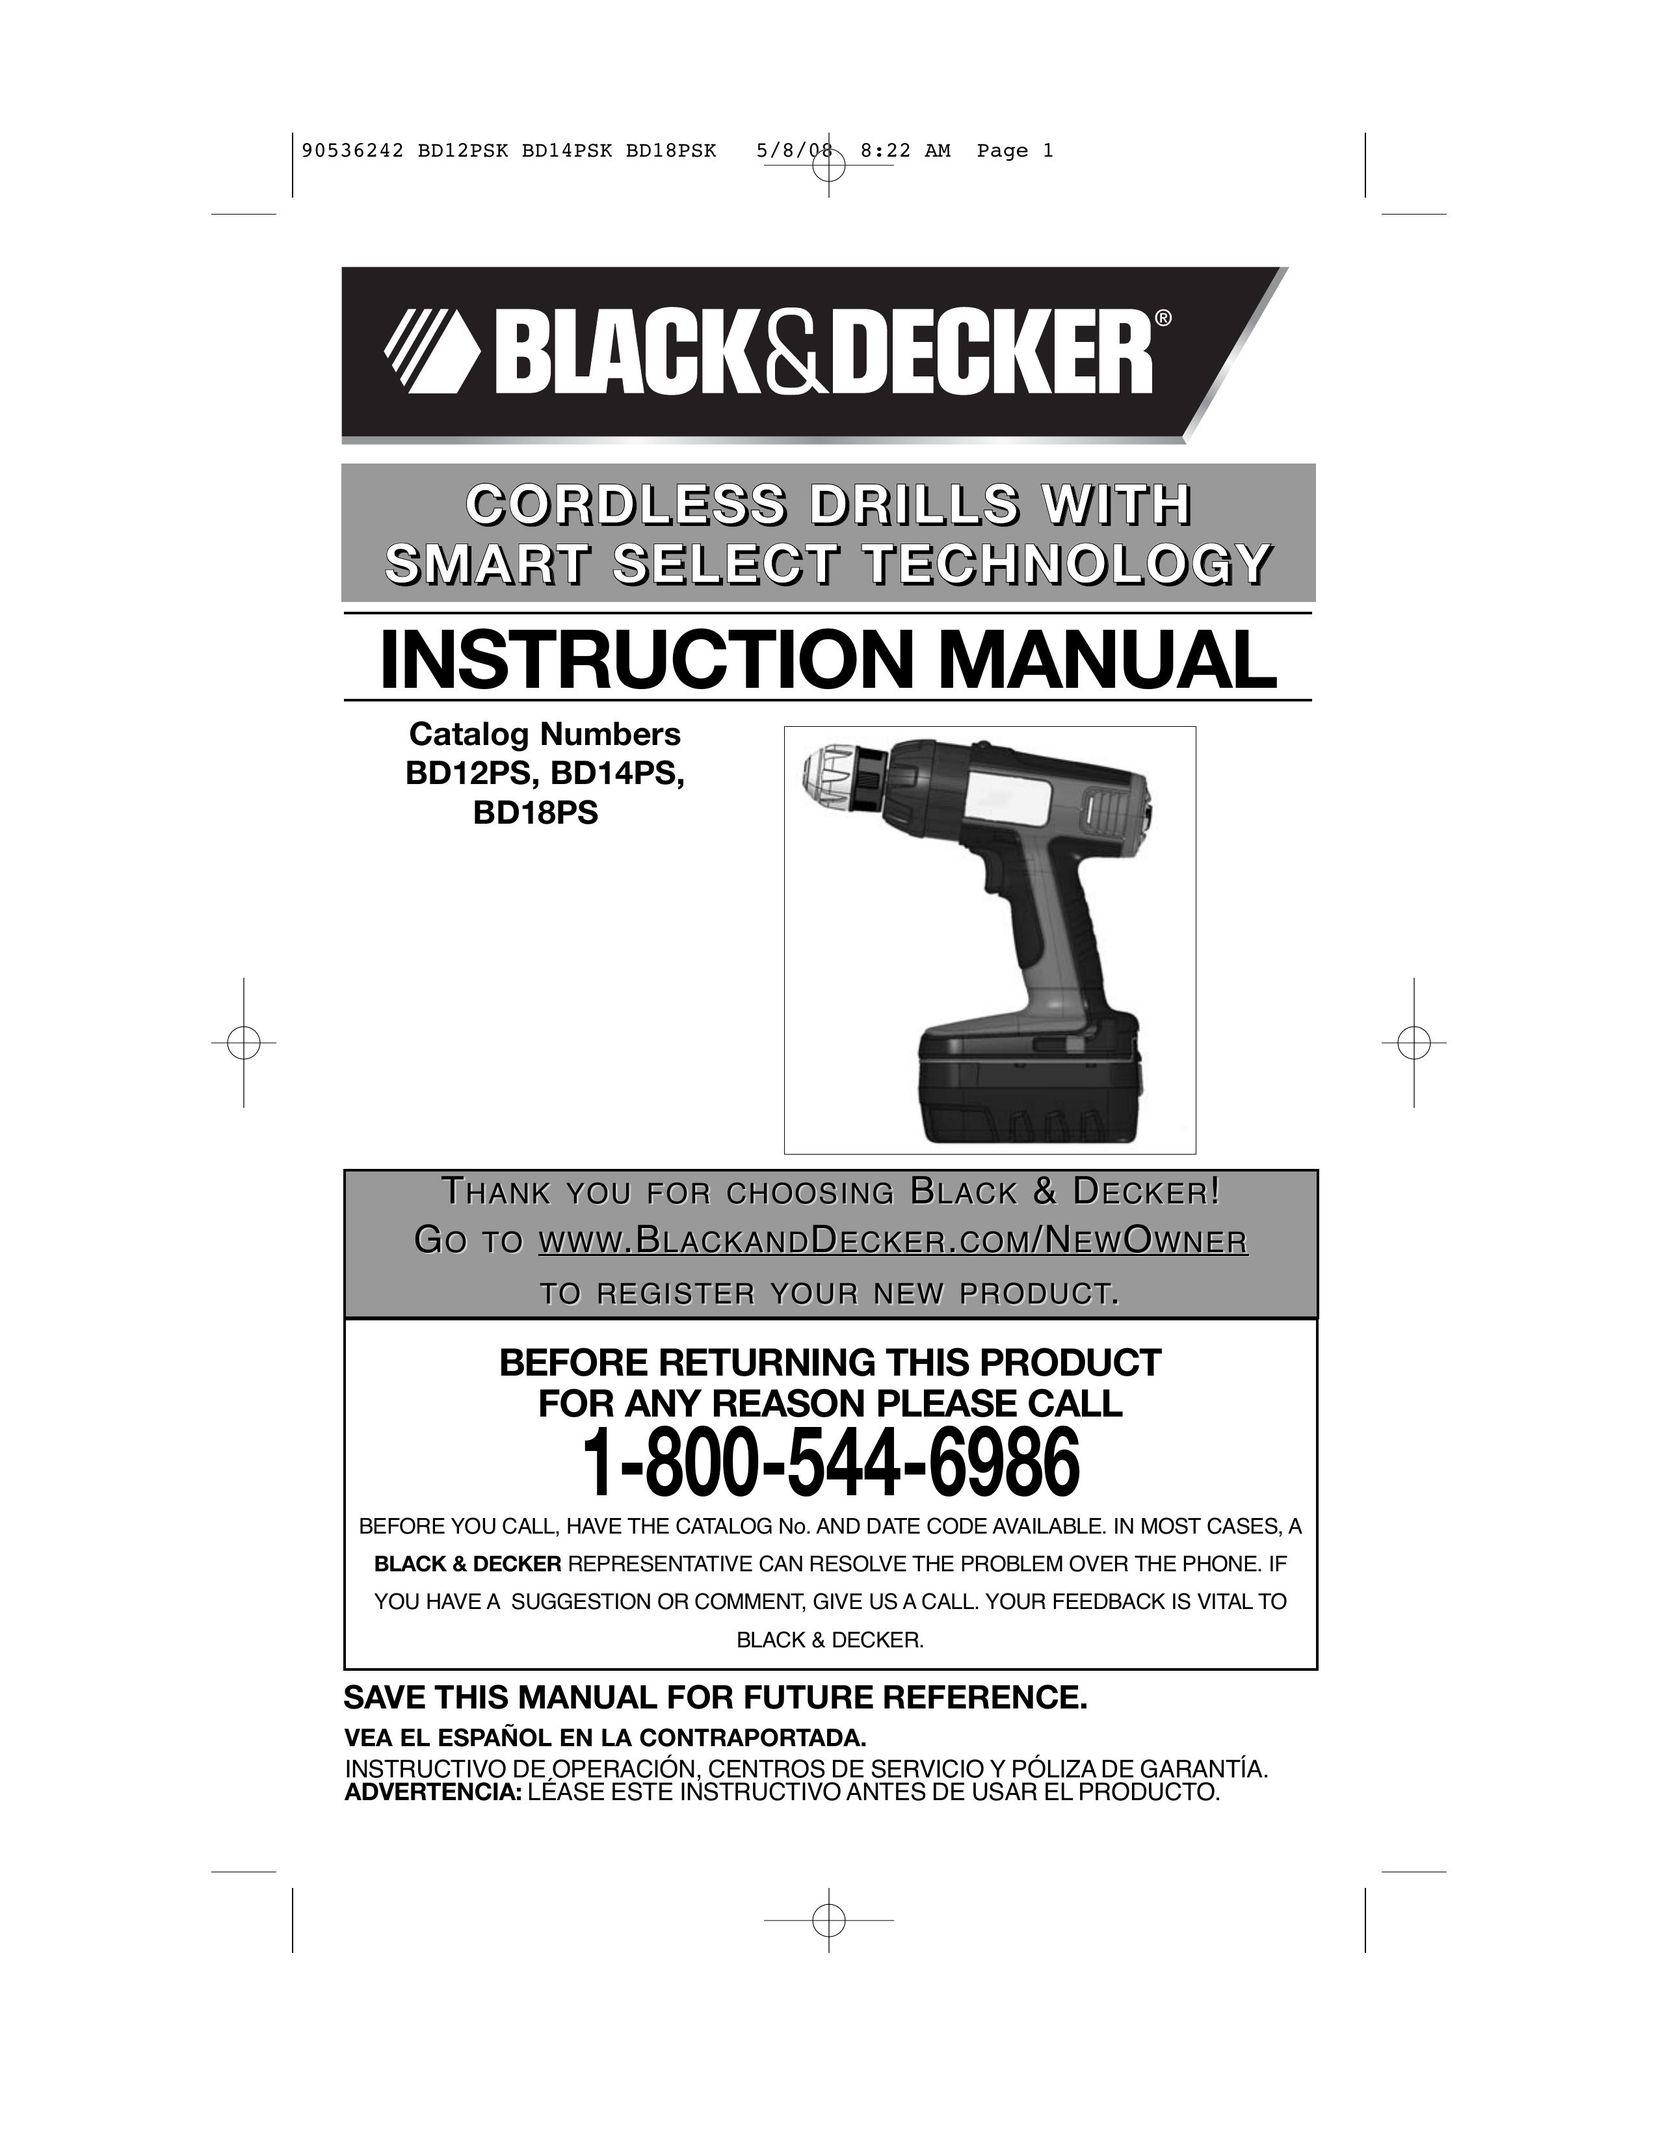 Black & Decker BD18PS Cordless Drill User Manual